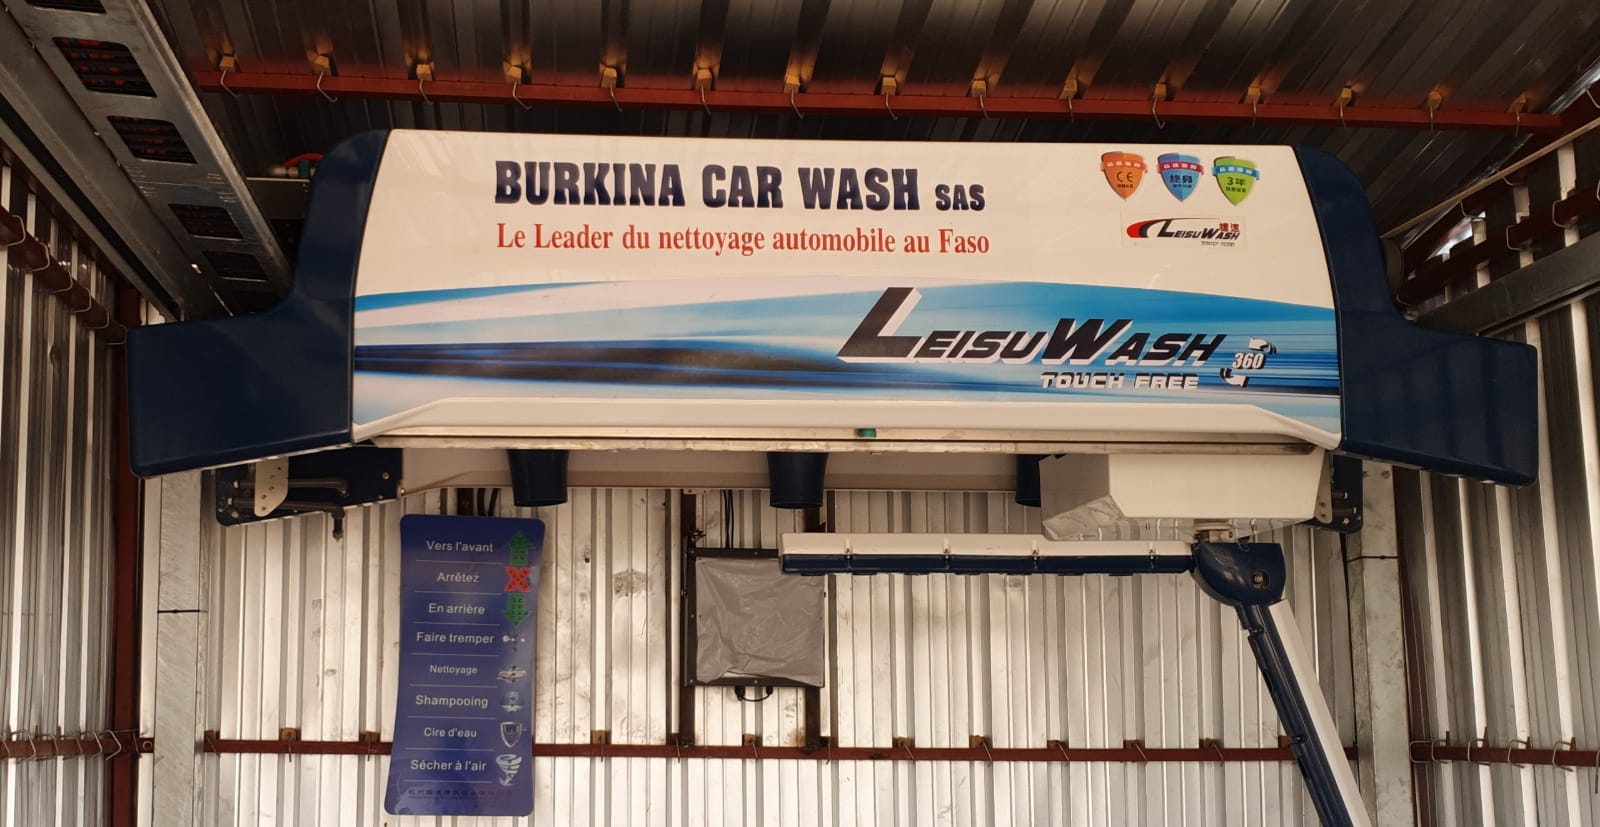 Burkina car wash sas